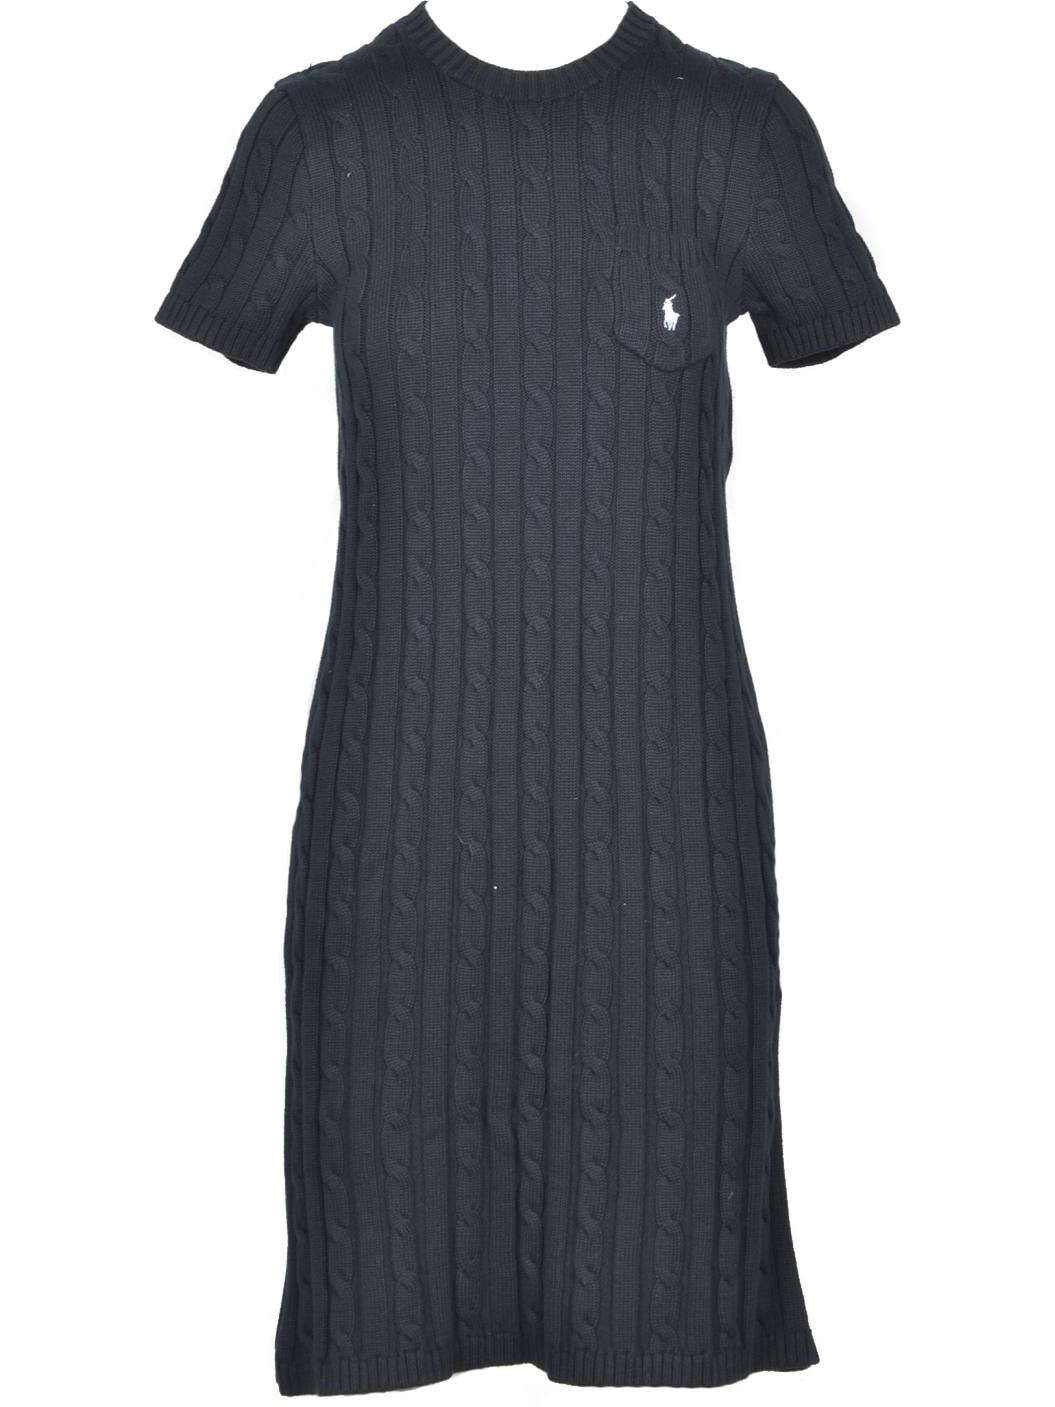 Ralph Lauren Black Cable-Knit Cotton Women's Dress XL at FORZIERI